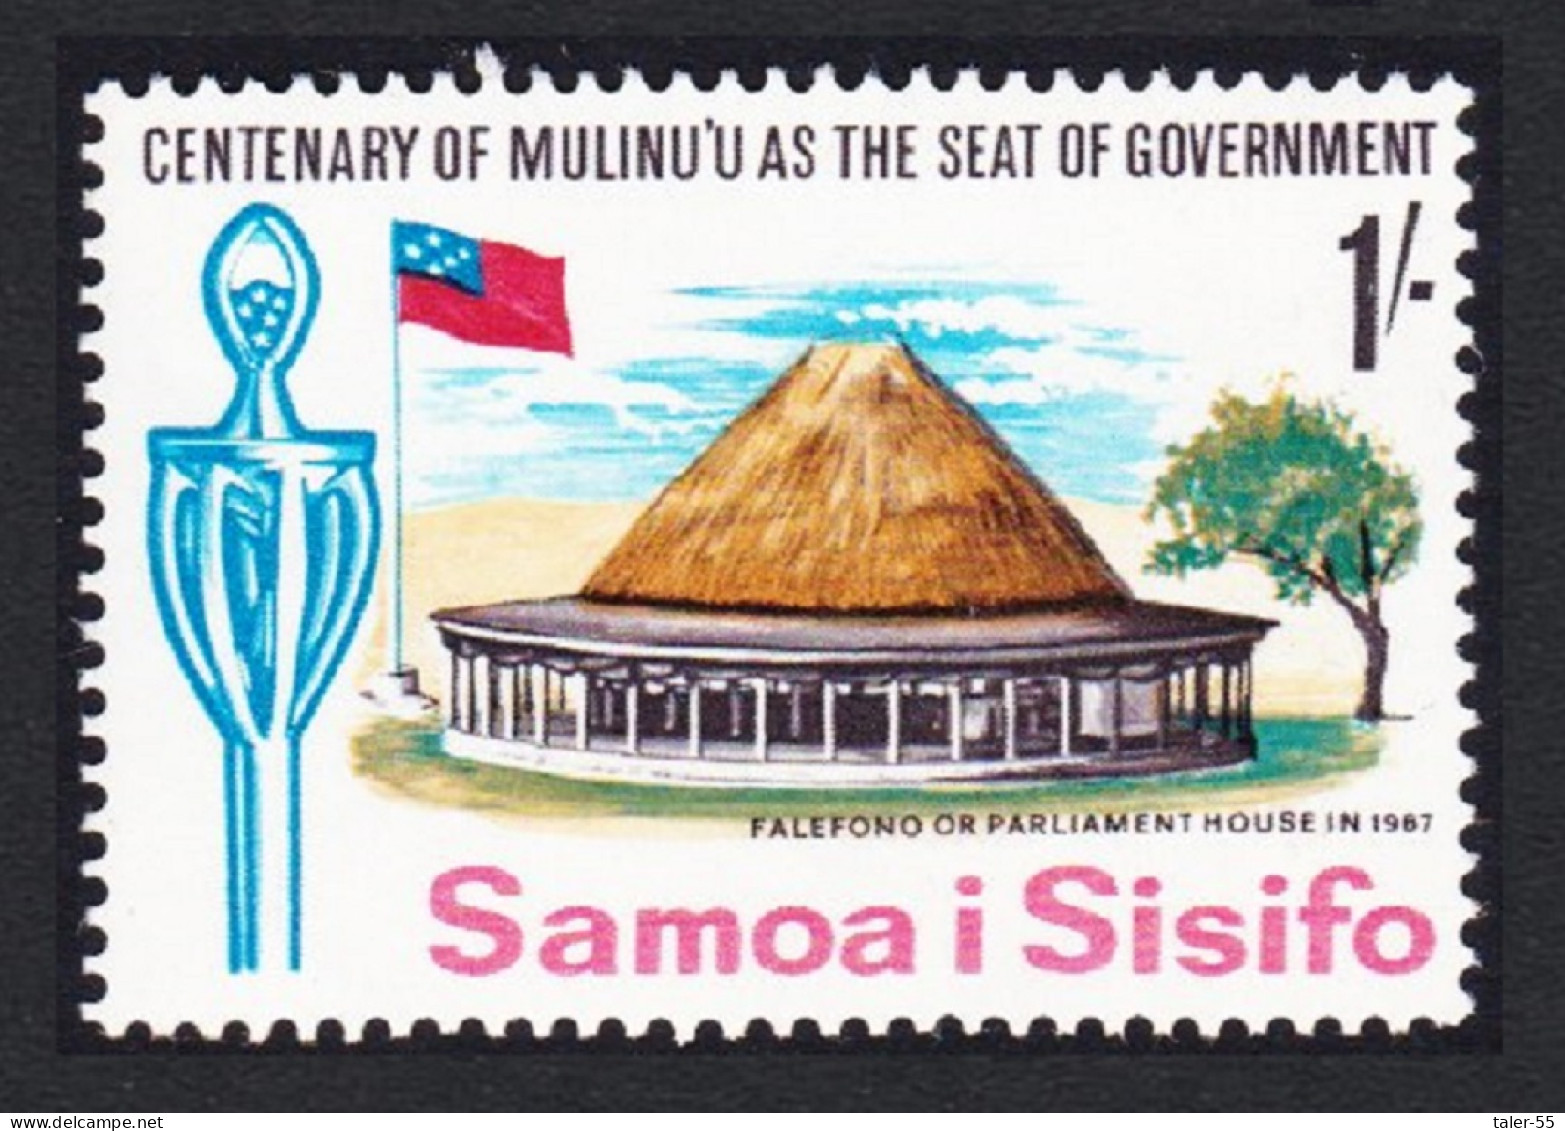 Samoa Fales - Houses Mulinu's Centenary 1Sh 1967 MNH SG#279 Sc#264 - Samoa